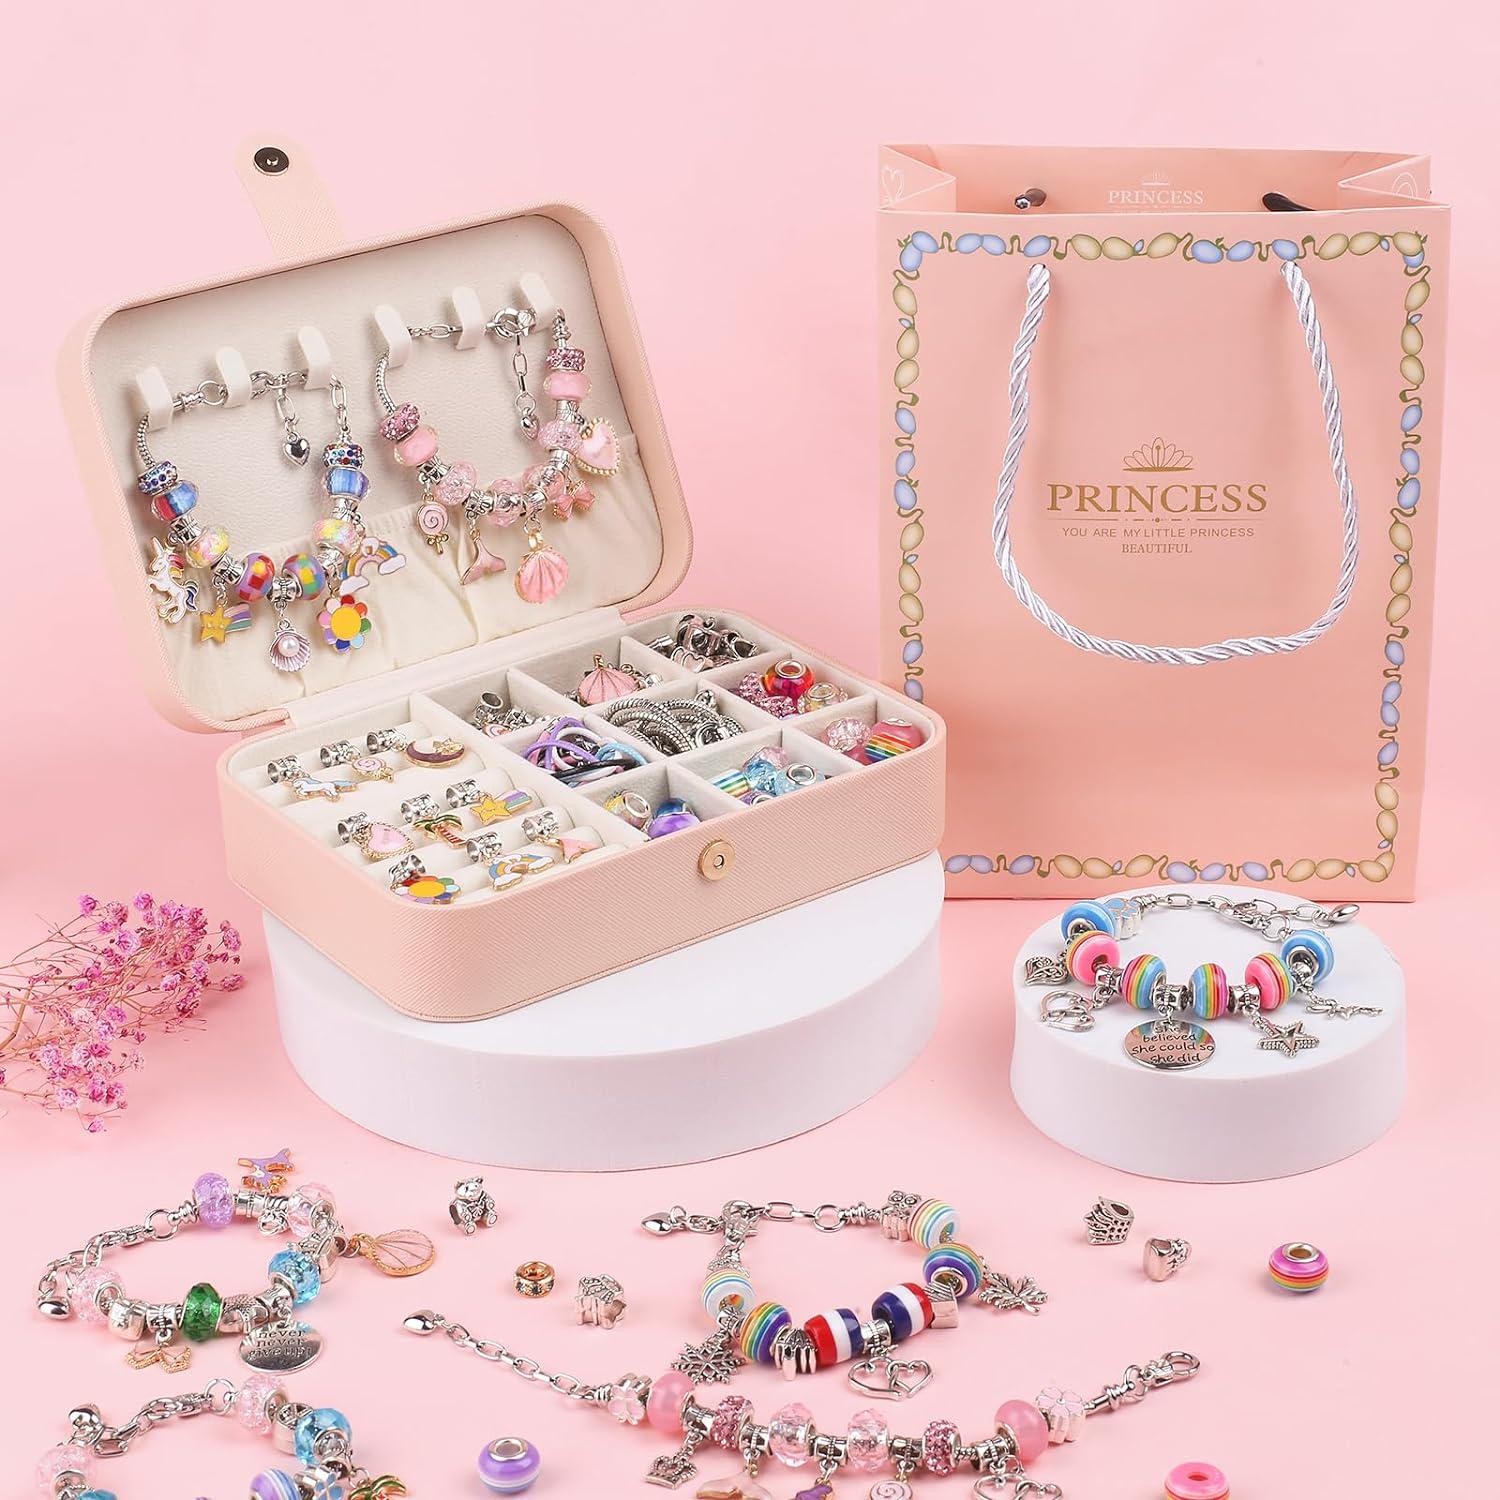 Charm Bracelet Making Kit Girls - UFU Beads for Jewelry Making Kit